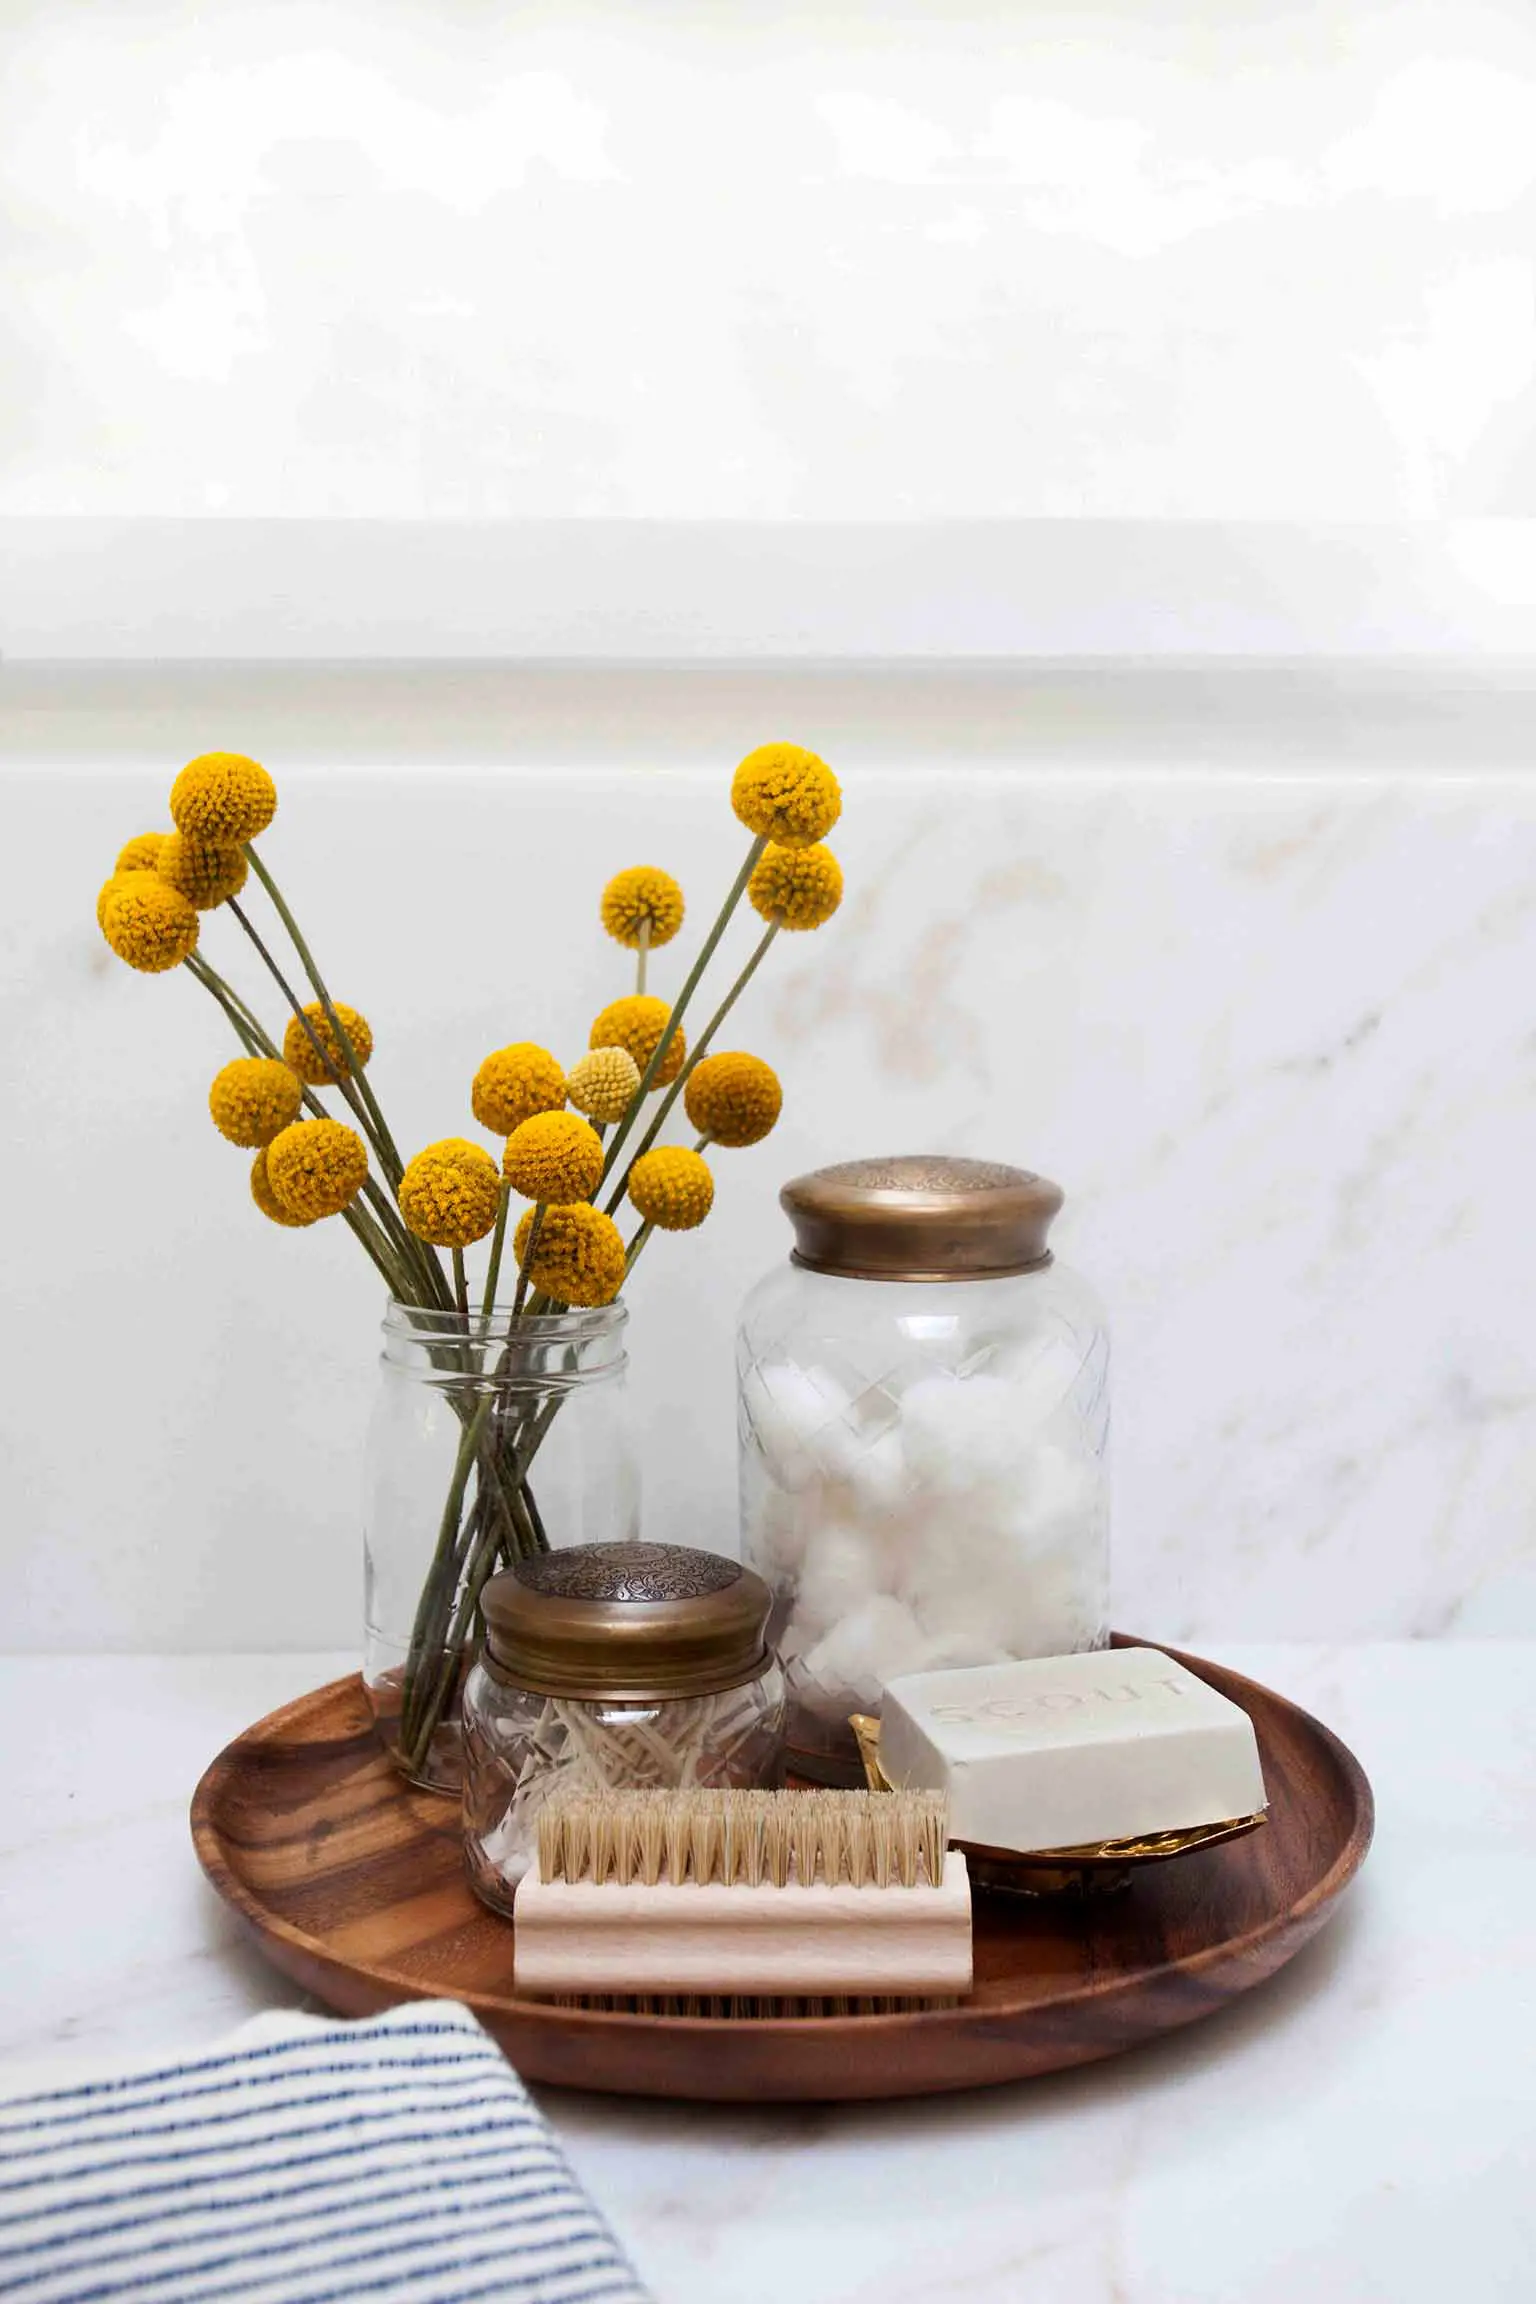 Bathroom vanity storage - simple ways to style a bathroom - That Homebird Life Blog